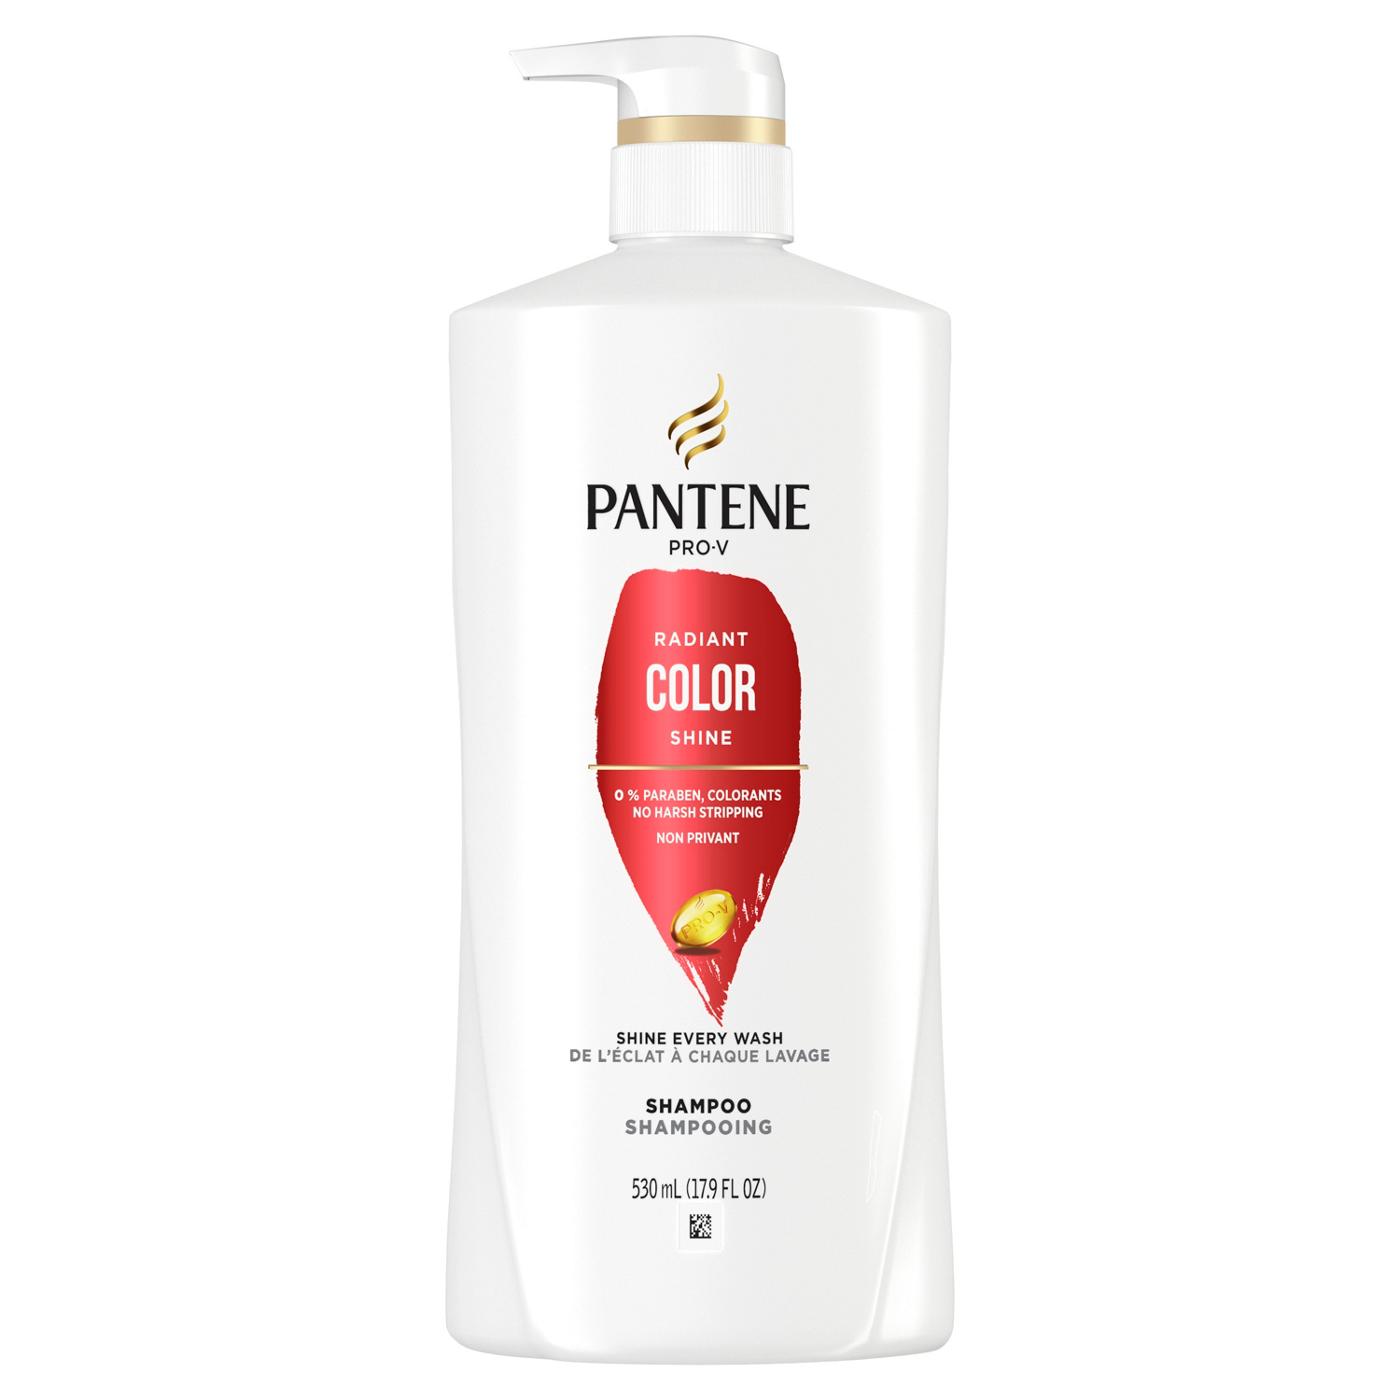 Pantene Pro V Radiant Color Shine Shampoo Shop Shampoo And Conditioner